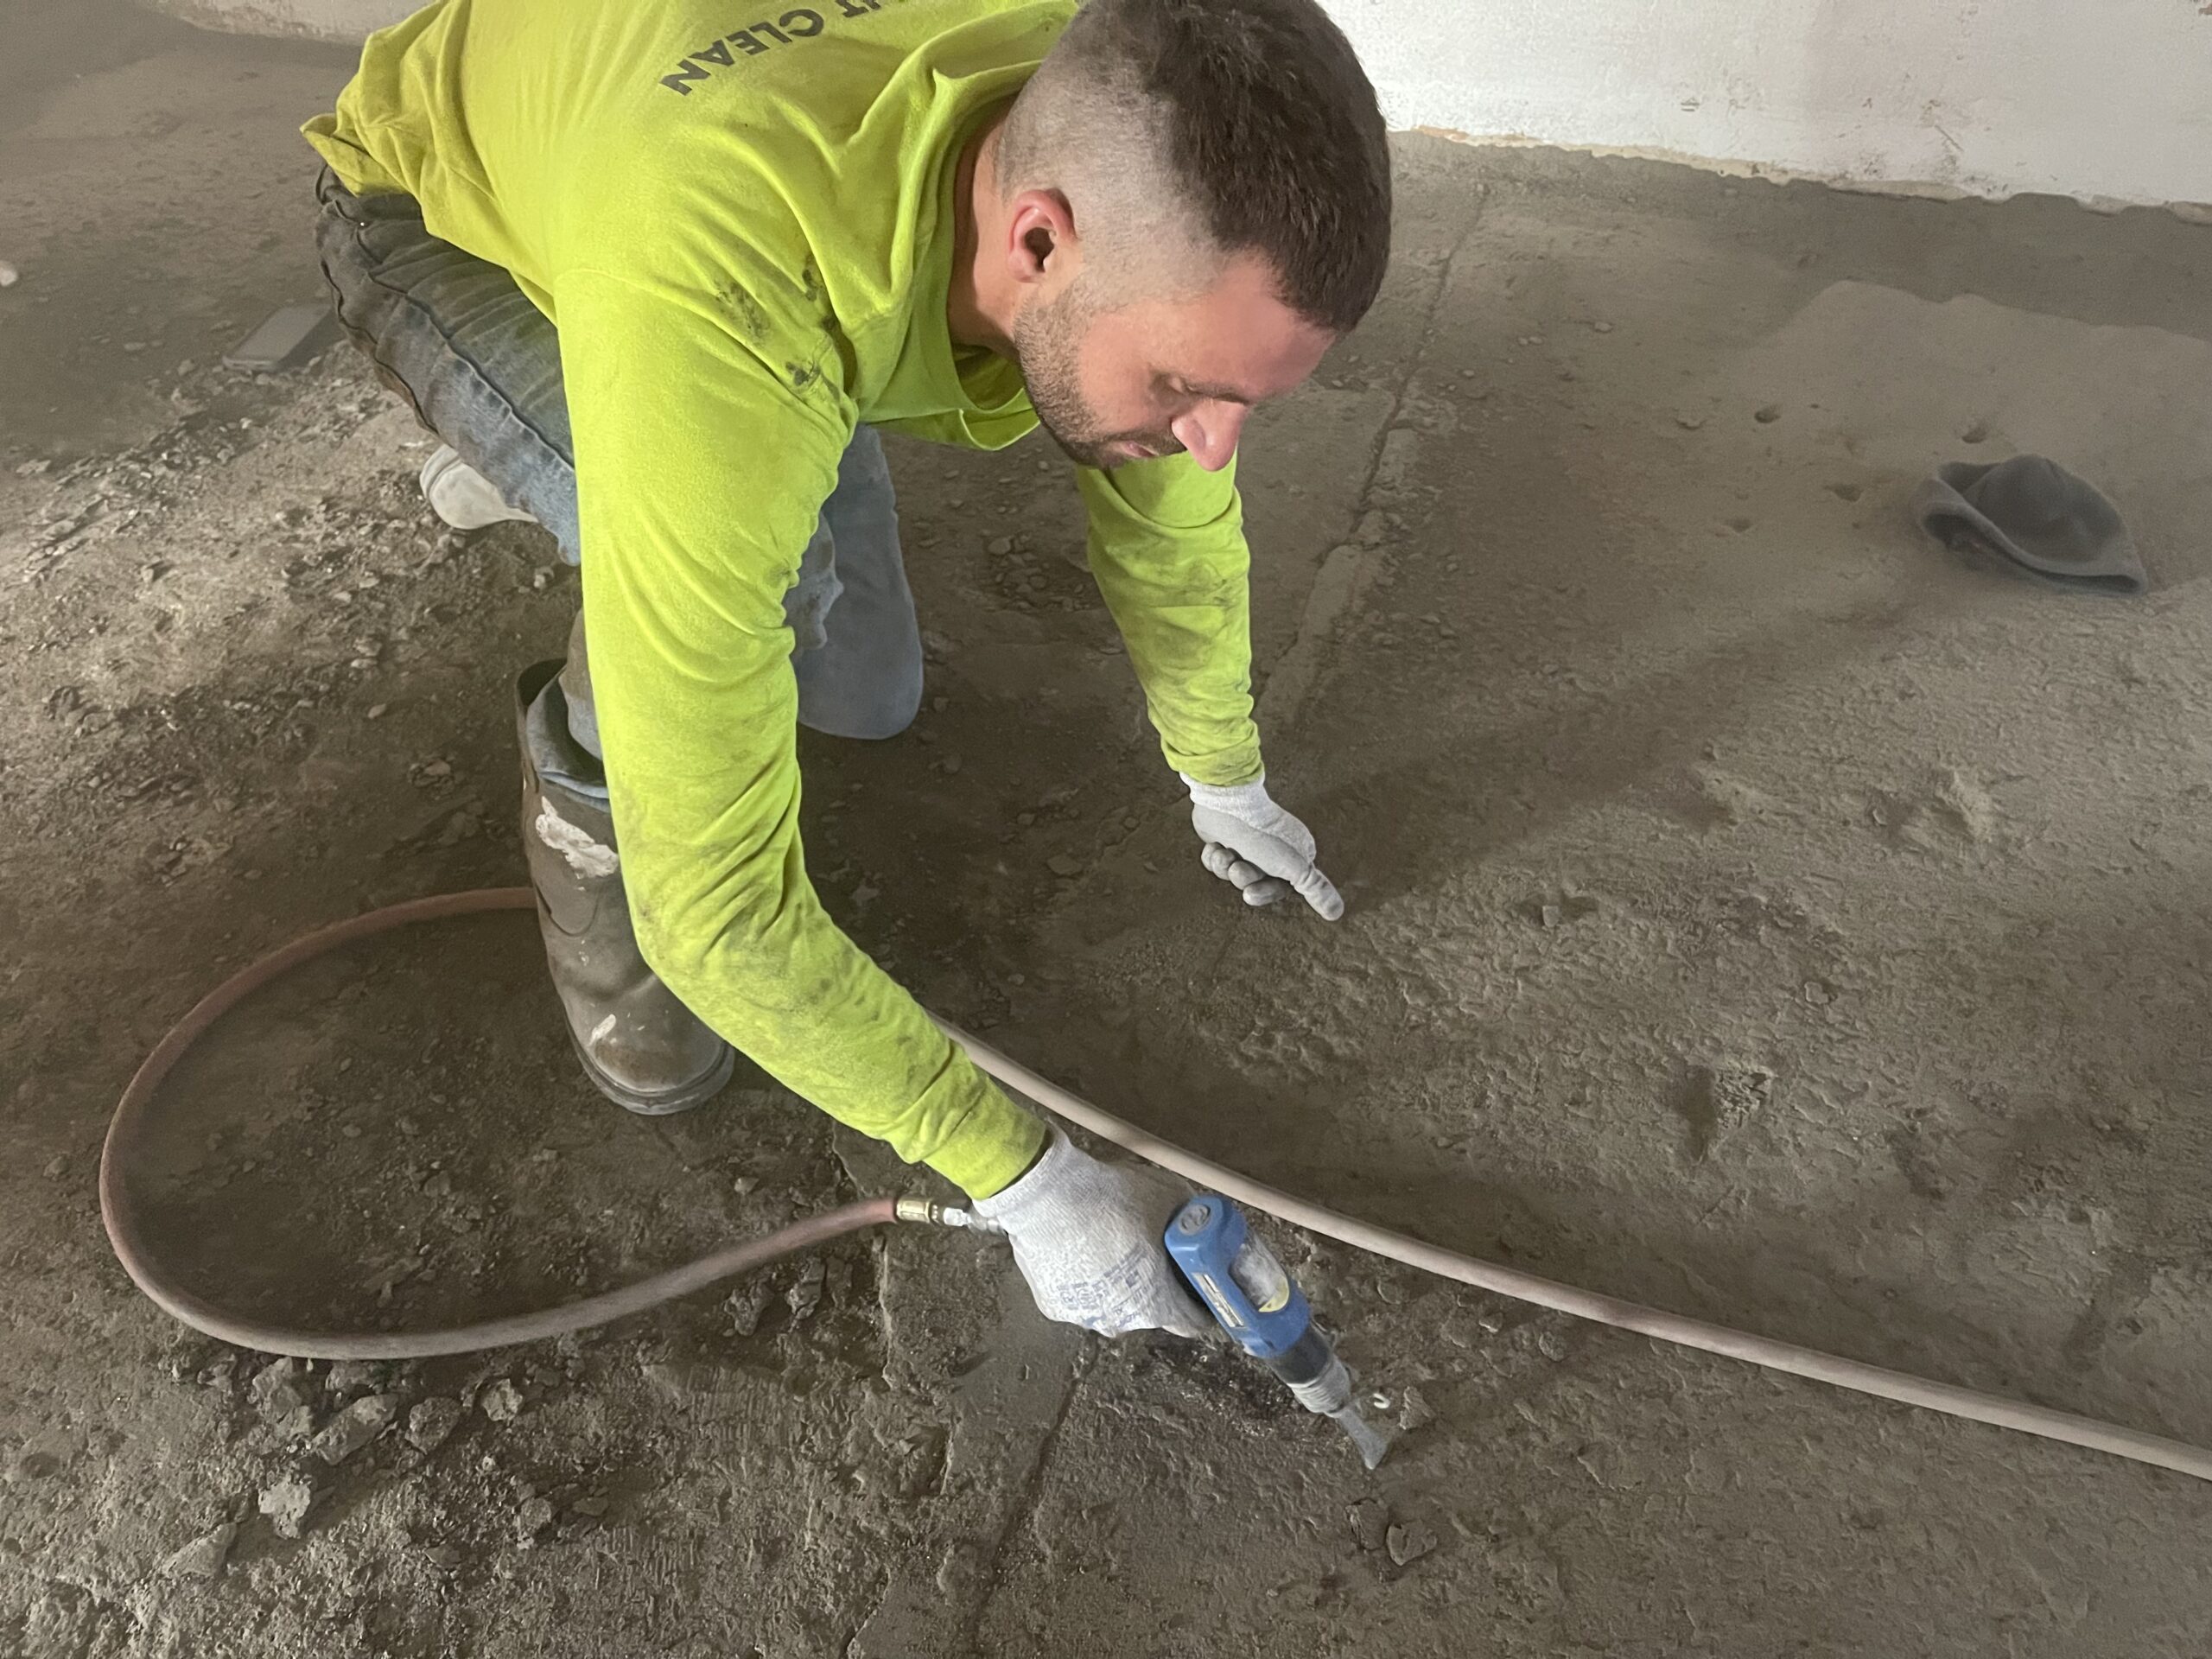 payton crew member drilling oil chunks off of concrete floor